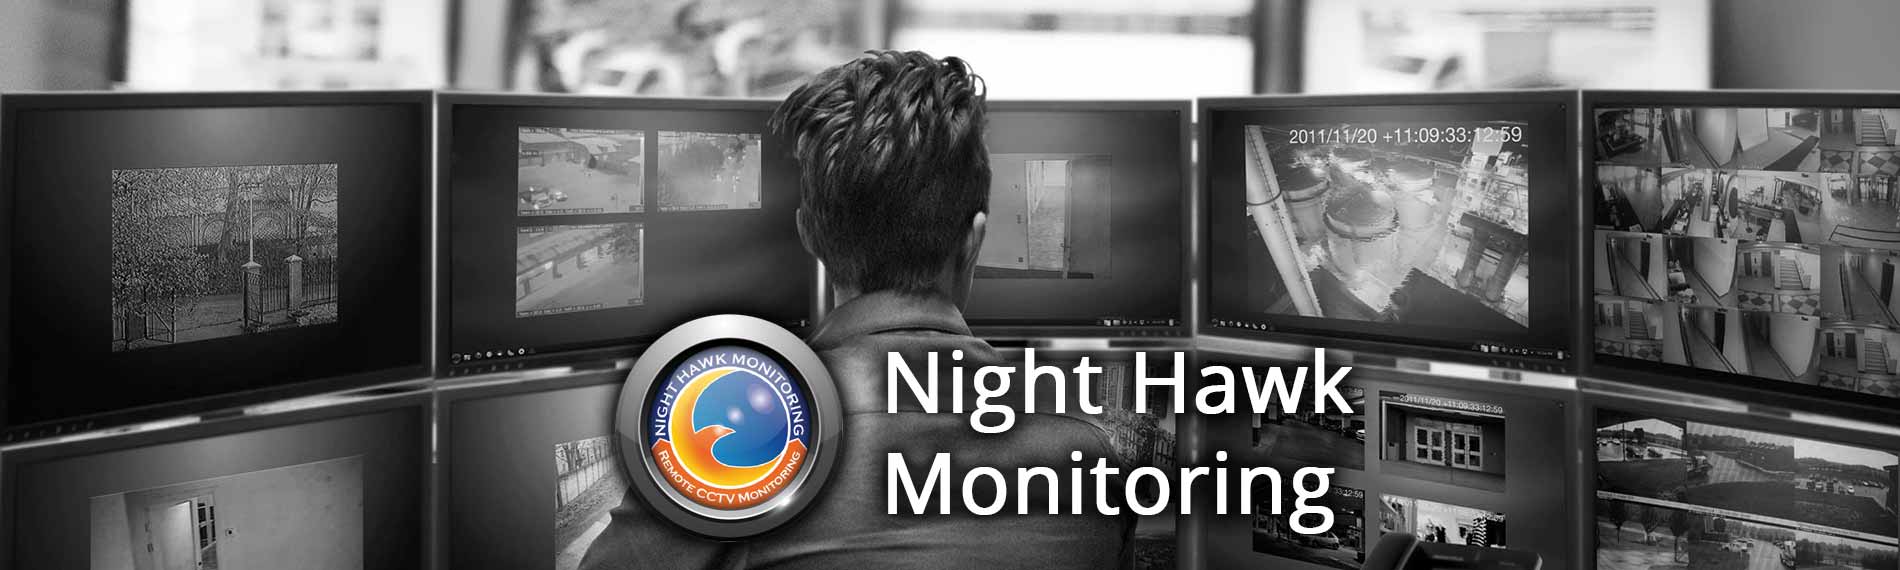 Remote Video Surveillance Grand Rapids - Remote Video Surveillance Monitoring - Live Security Cameras Monitoring Grand Rapids